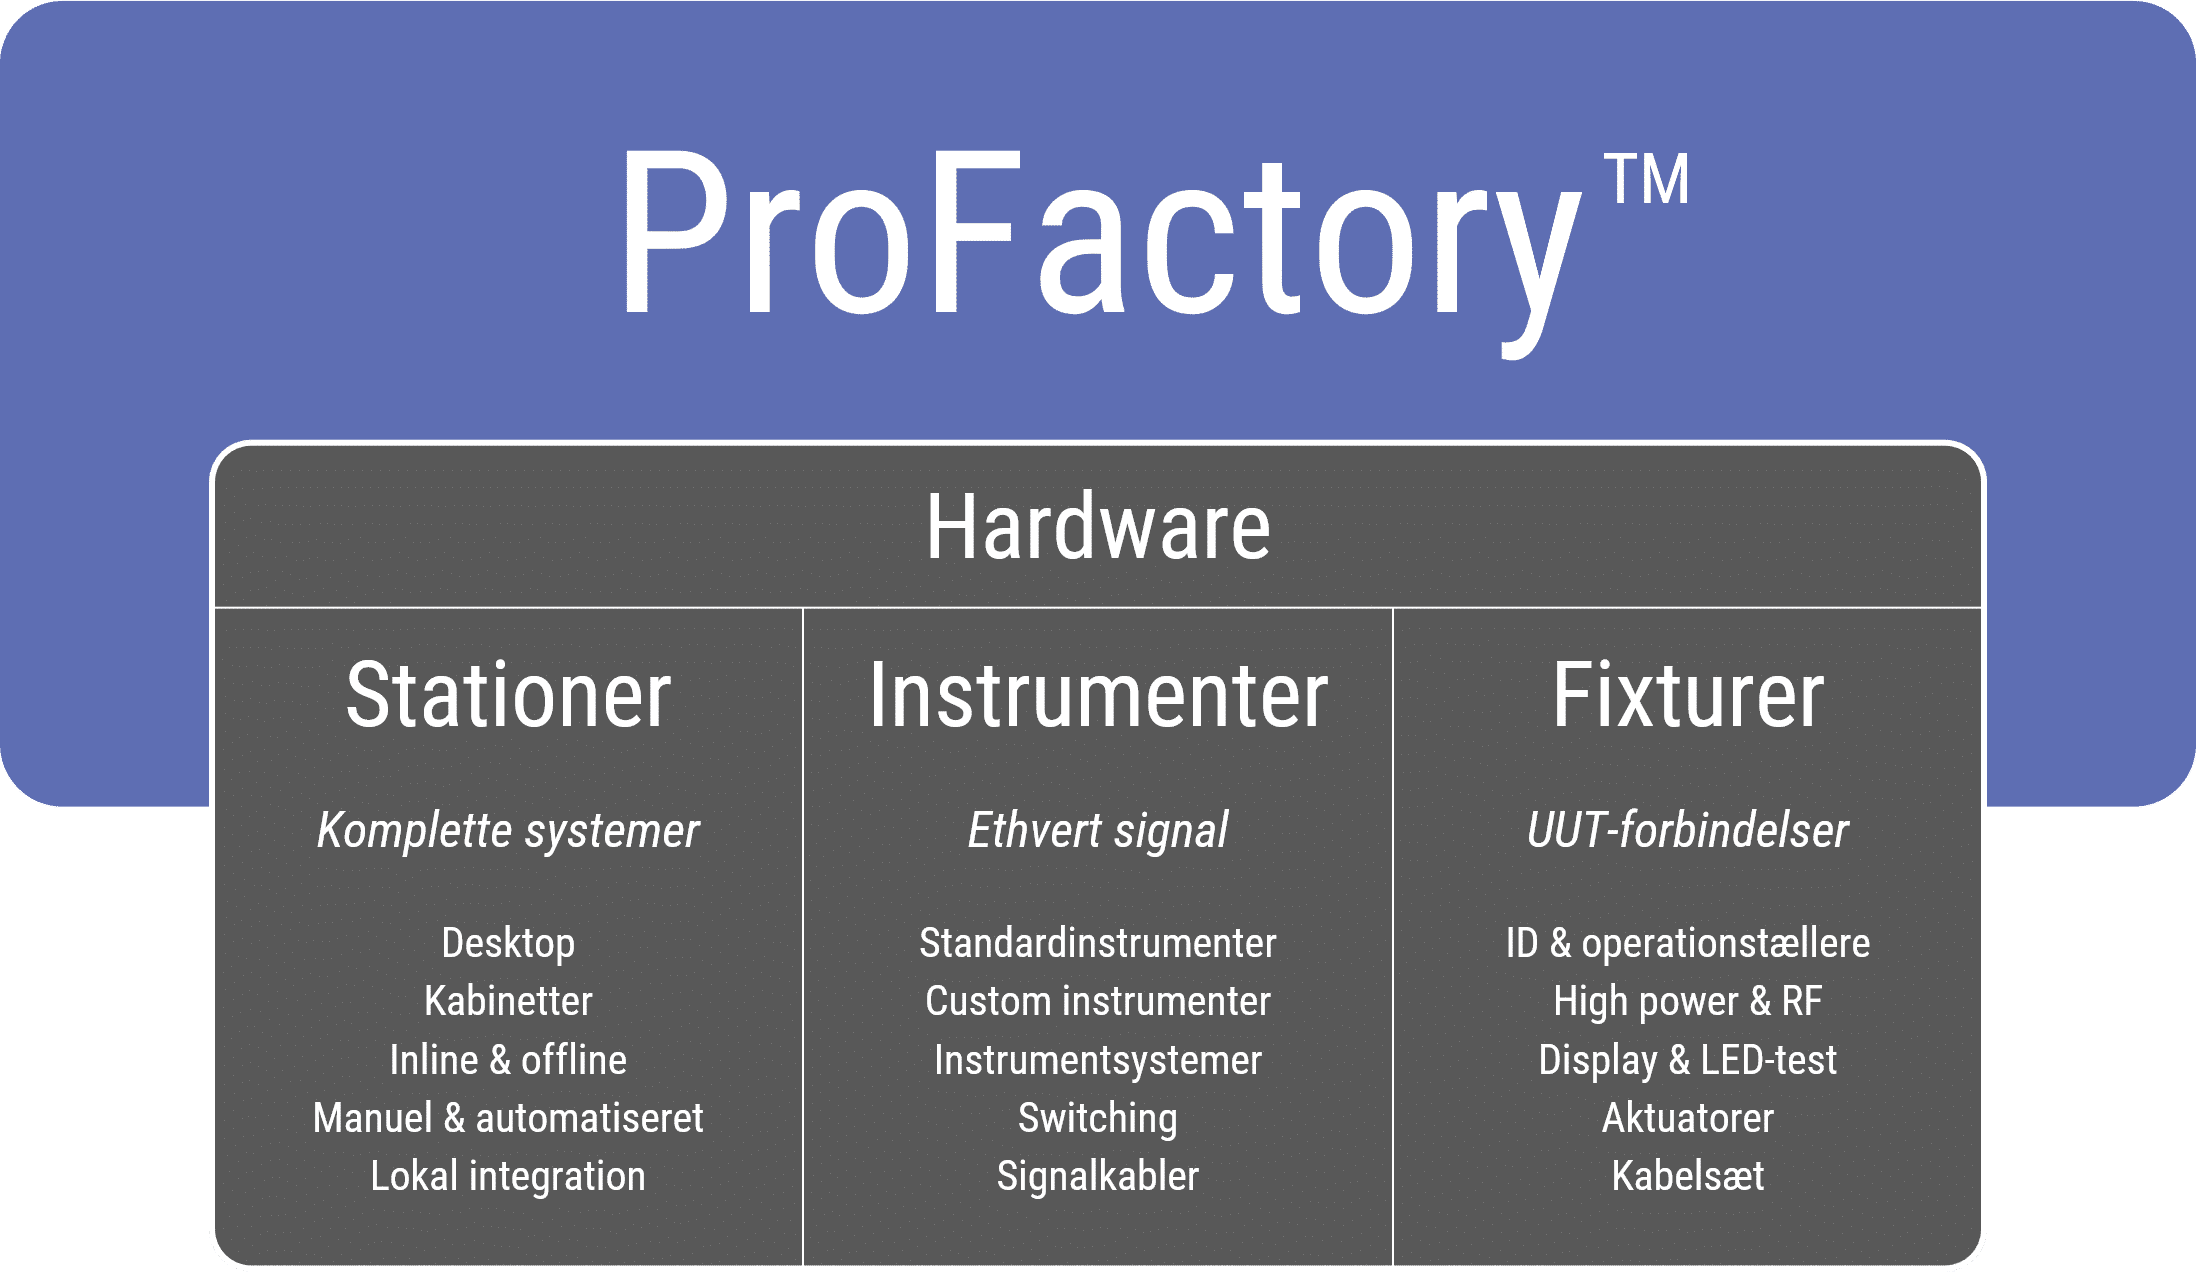 ProFactory testsystem - Hardware